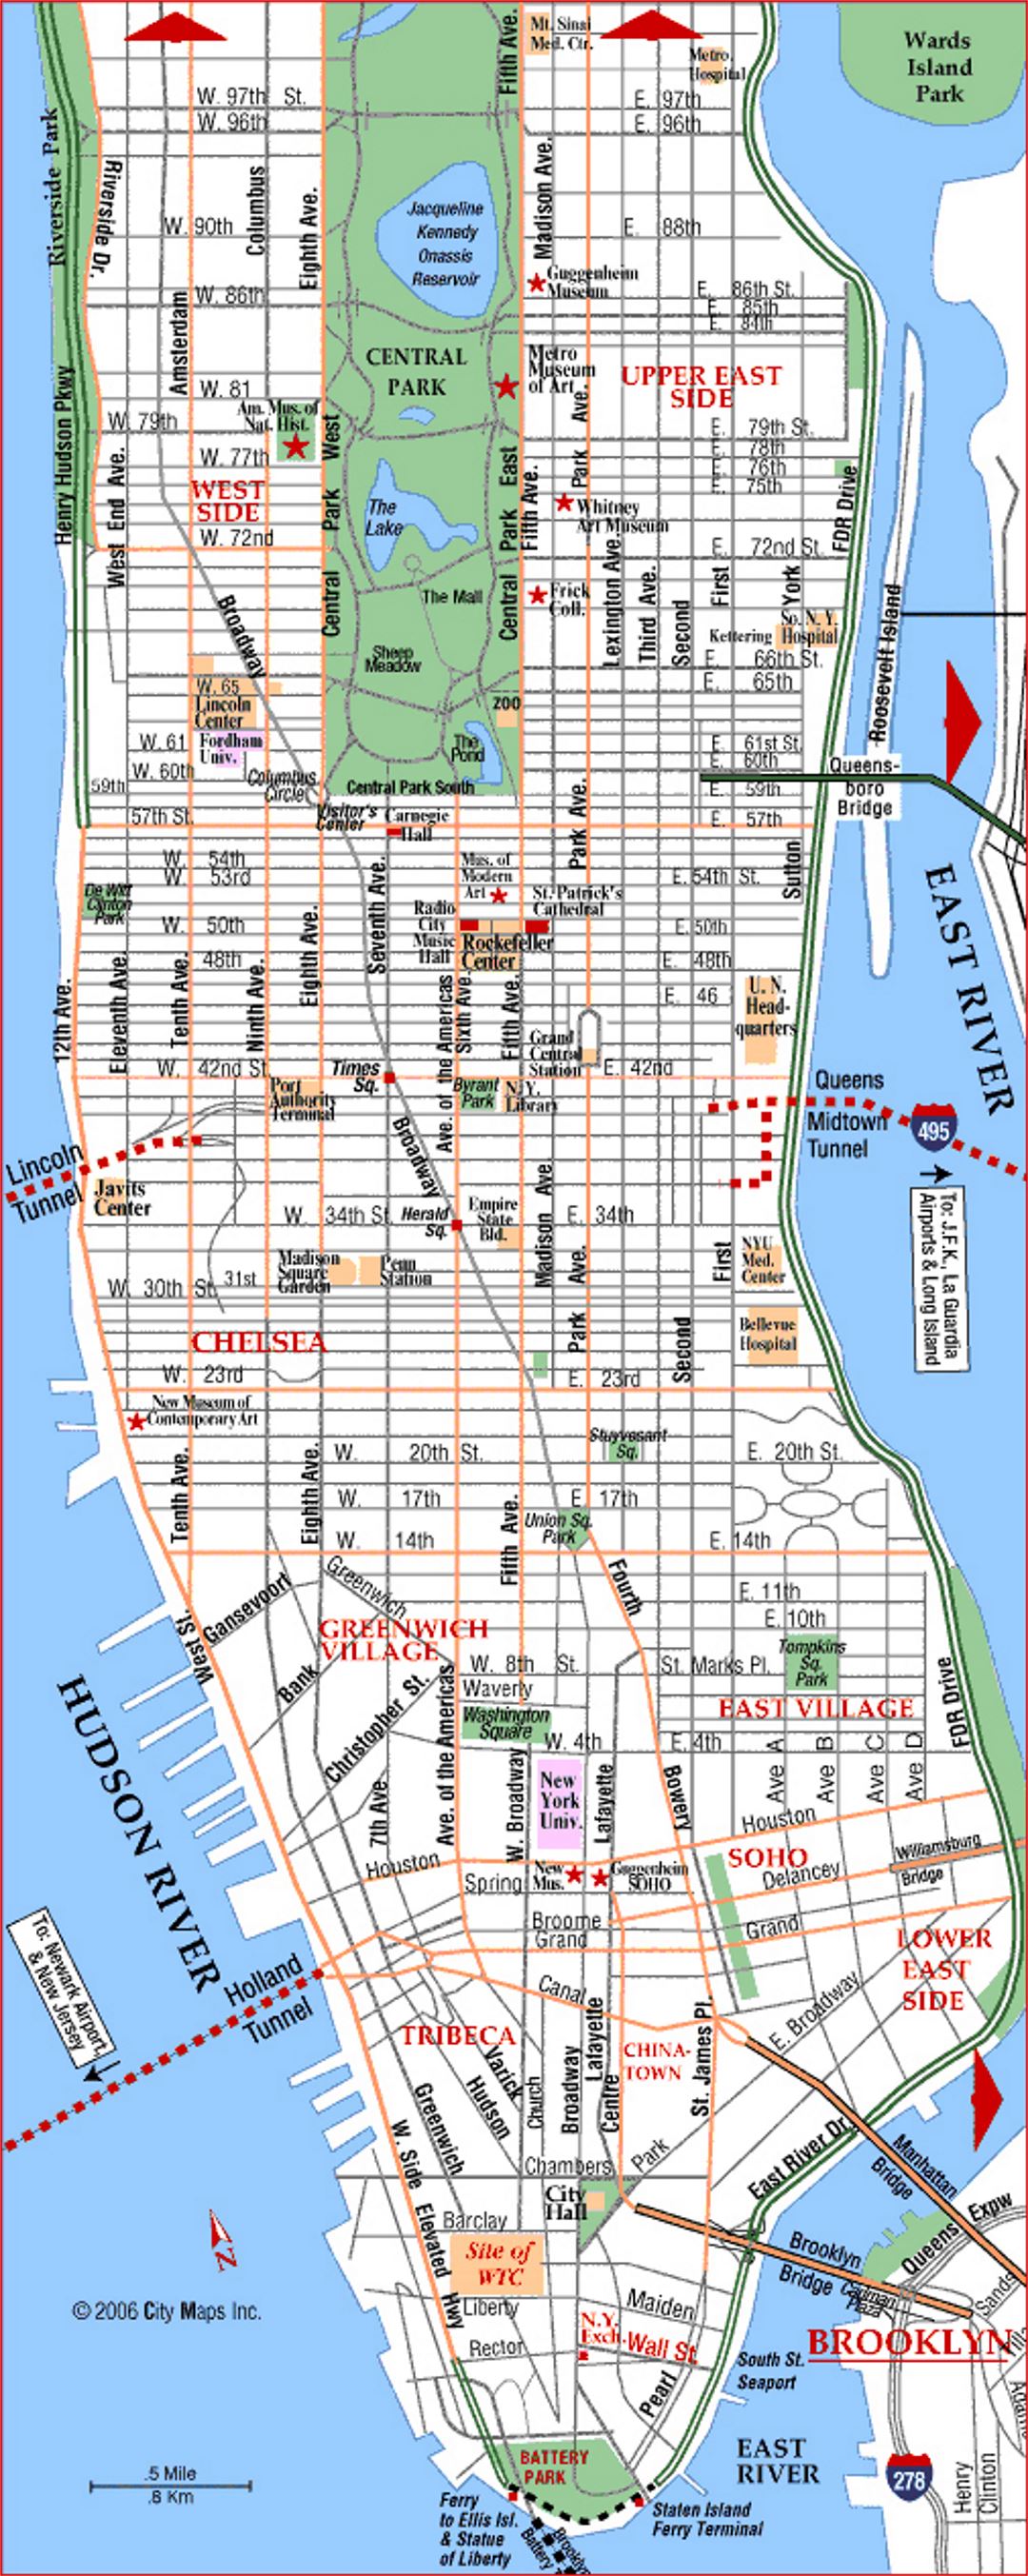 Road map of Manhattan